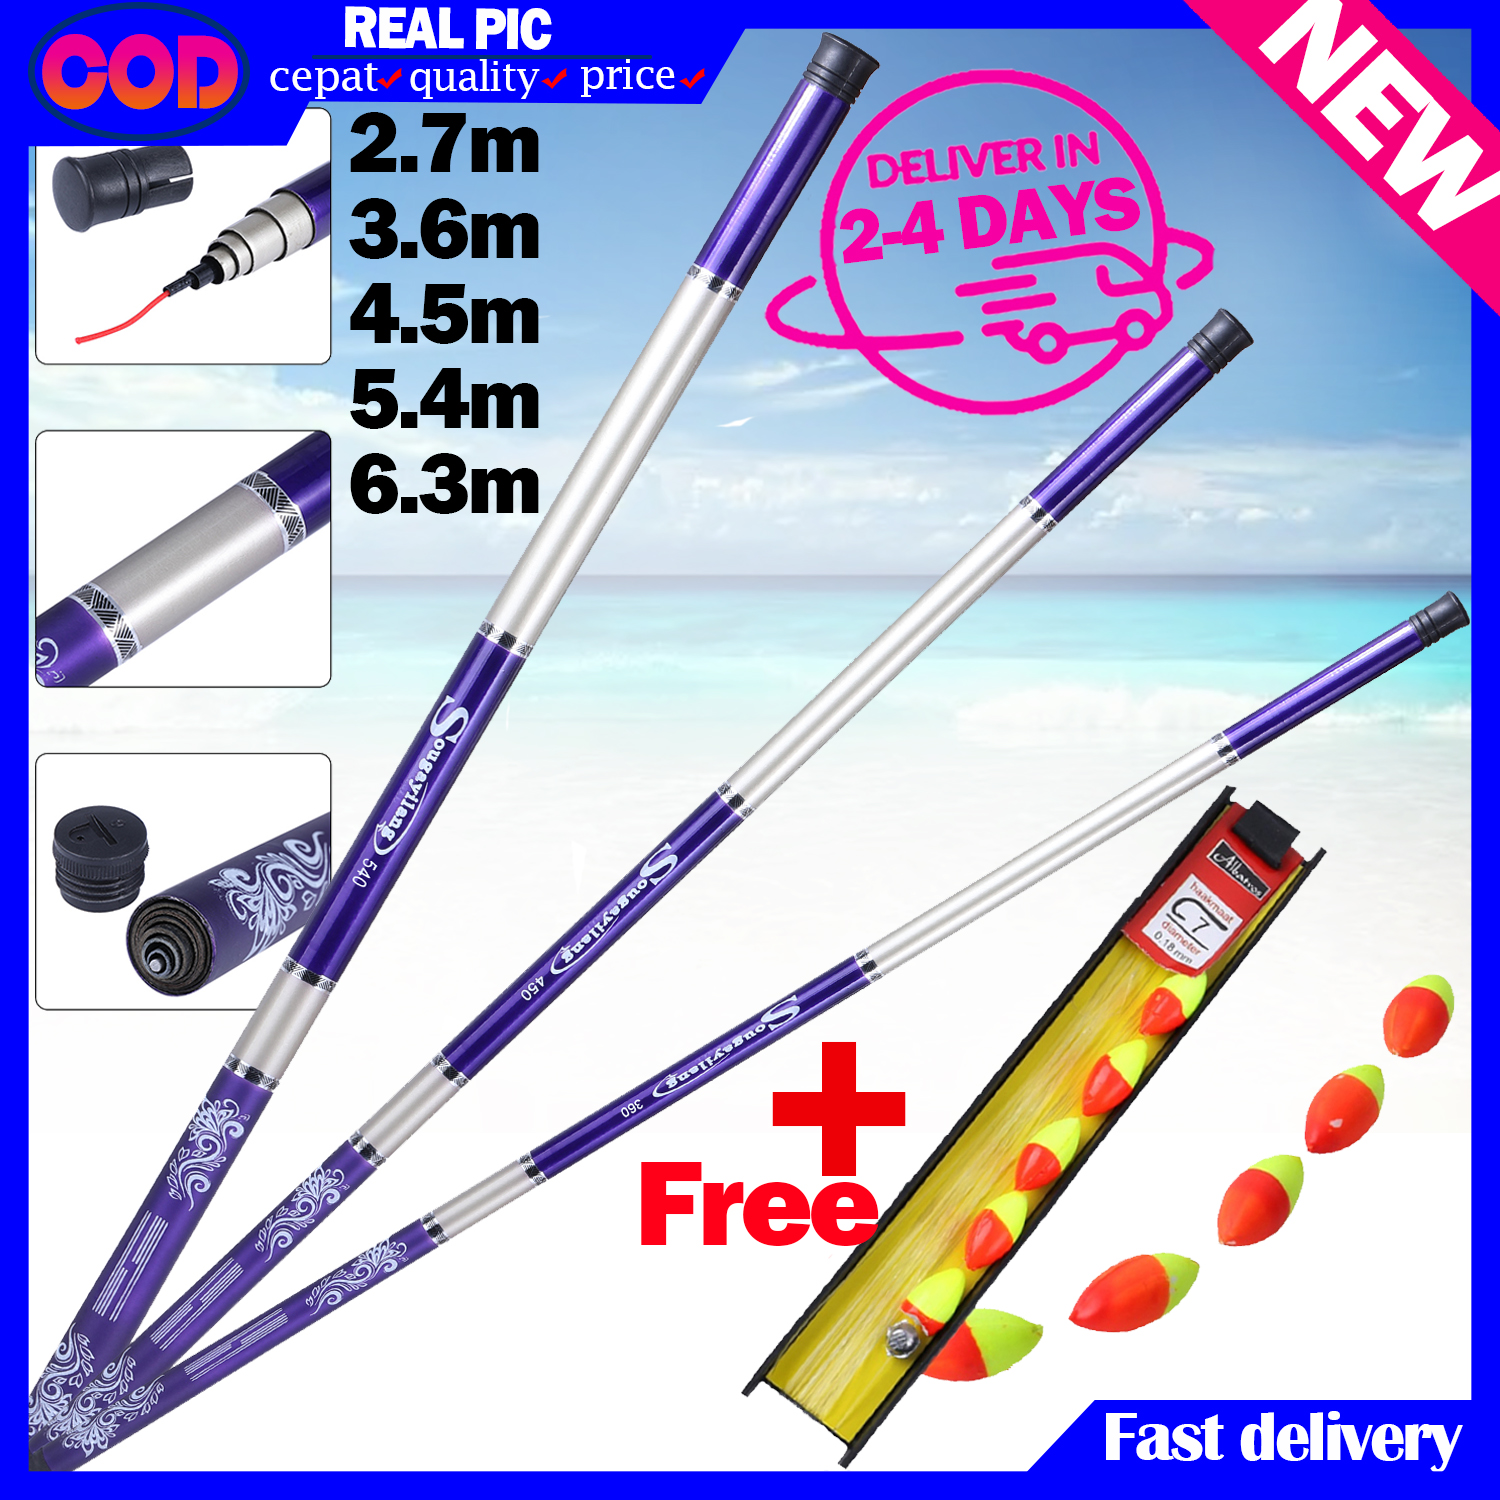 Sougayilang 1.8M Fishing Rod & Reel Sets EVA Handle Telescopic Fishing Rod  5.2:1 Gear Ratio Spinning Reel Line Lure Combo Full Kit for Kids Fishing